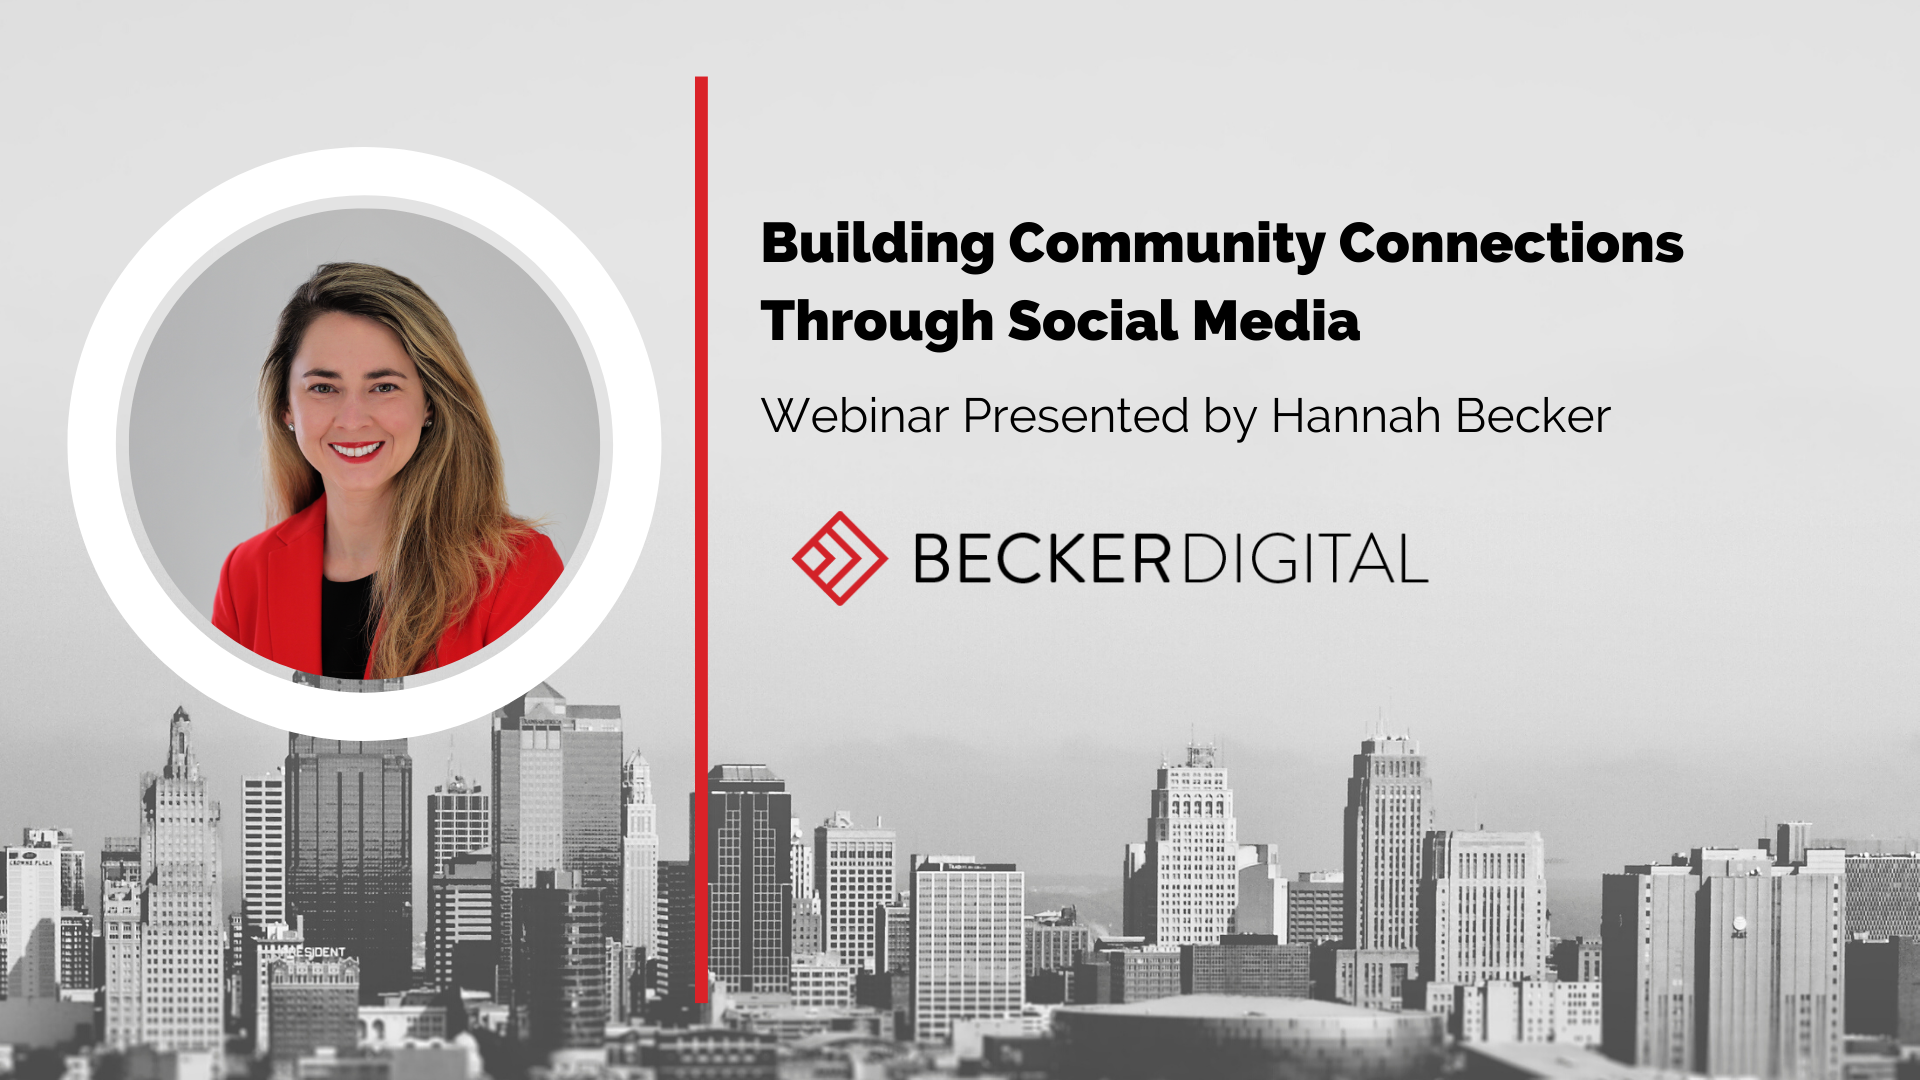 Building Community Connections Through Social Media